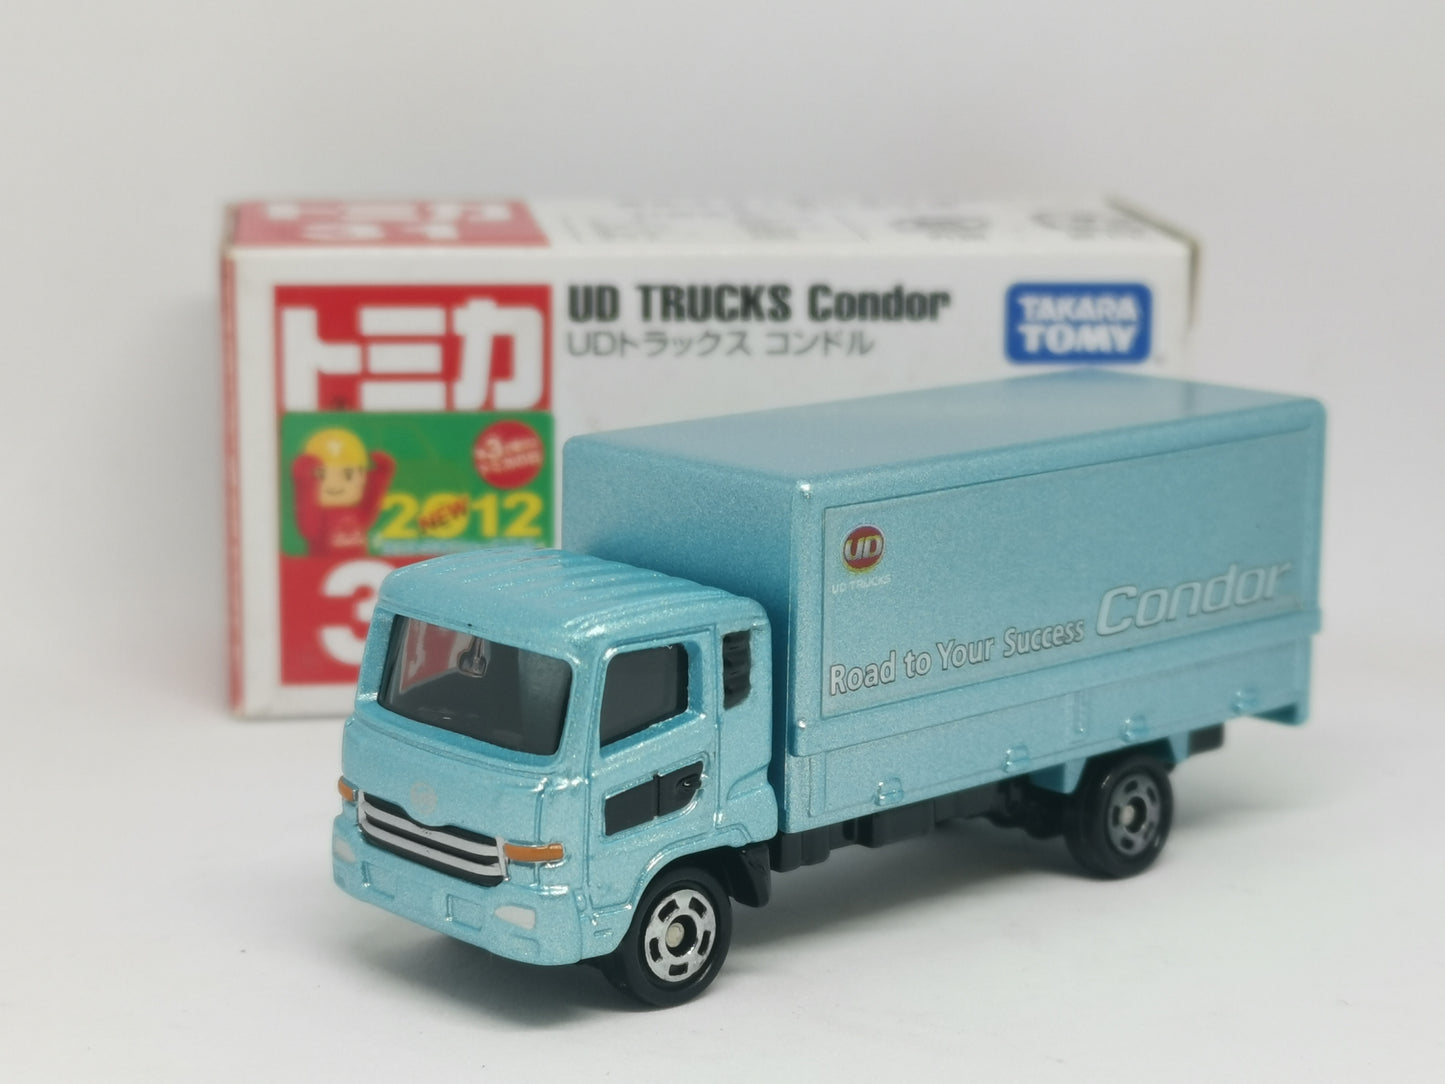 Tomica #31 UD Trucks Condor